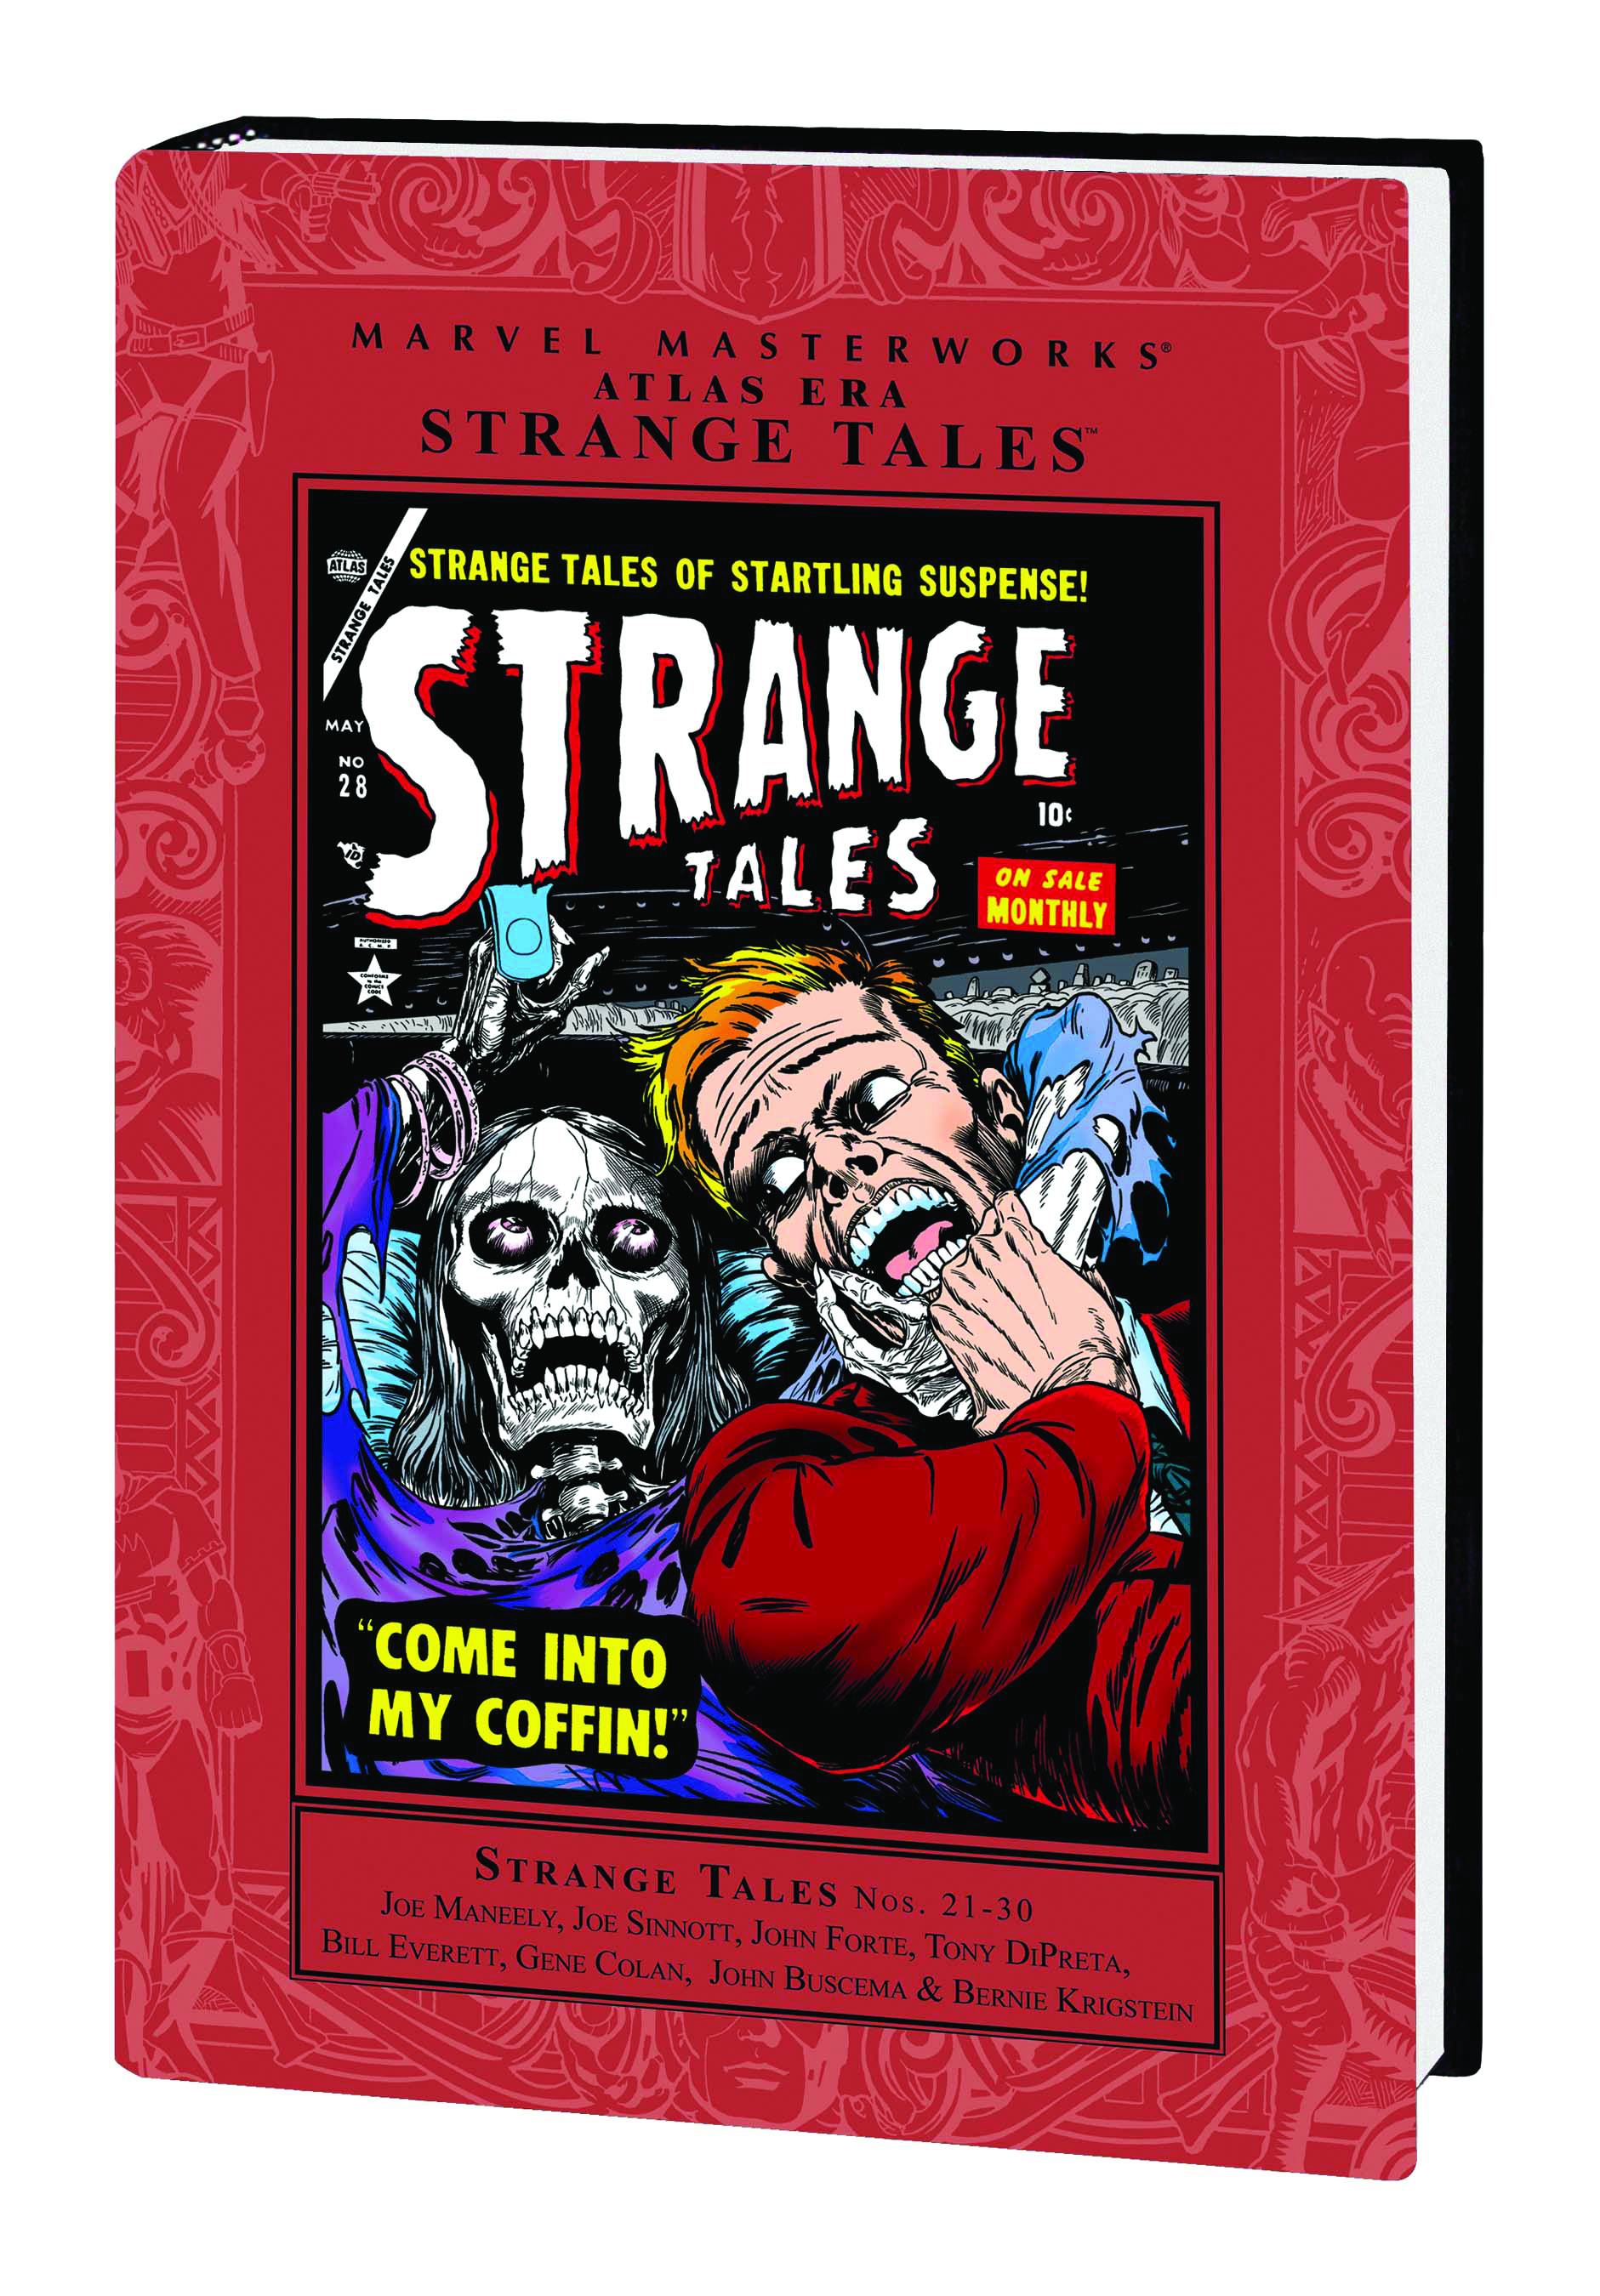 Marvel Masterworks Atlas Era Strange Tales Hardcover Volume 3